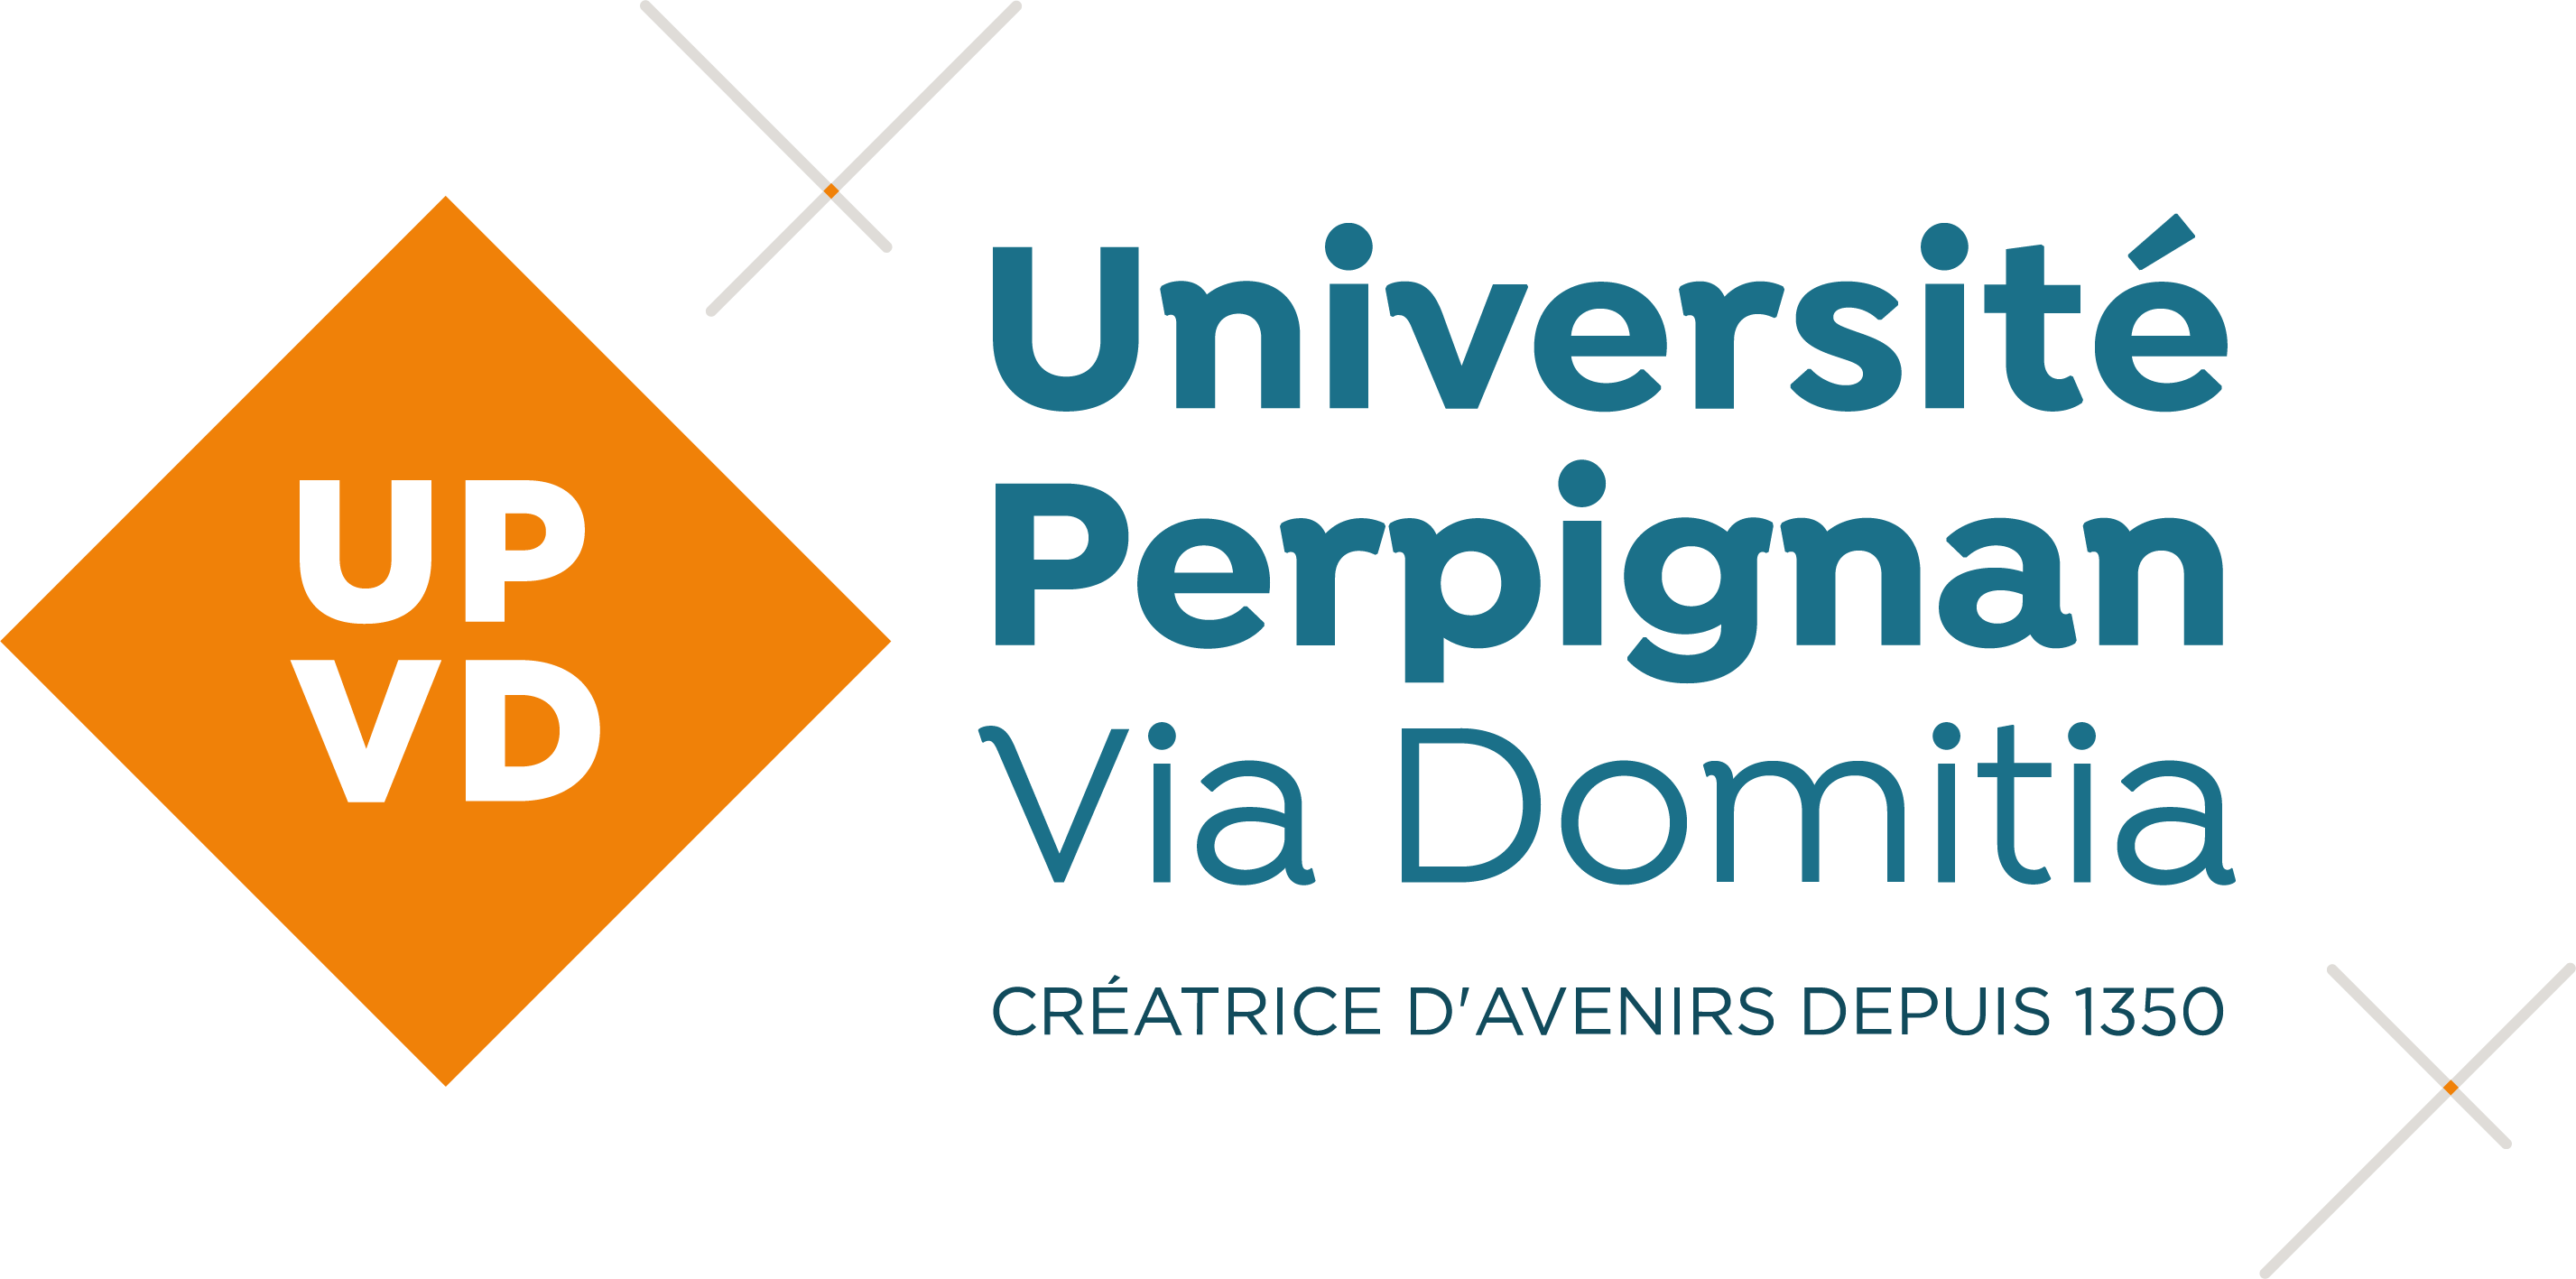 logo UPVD